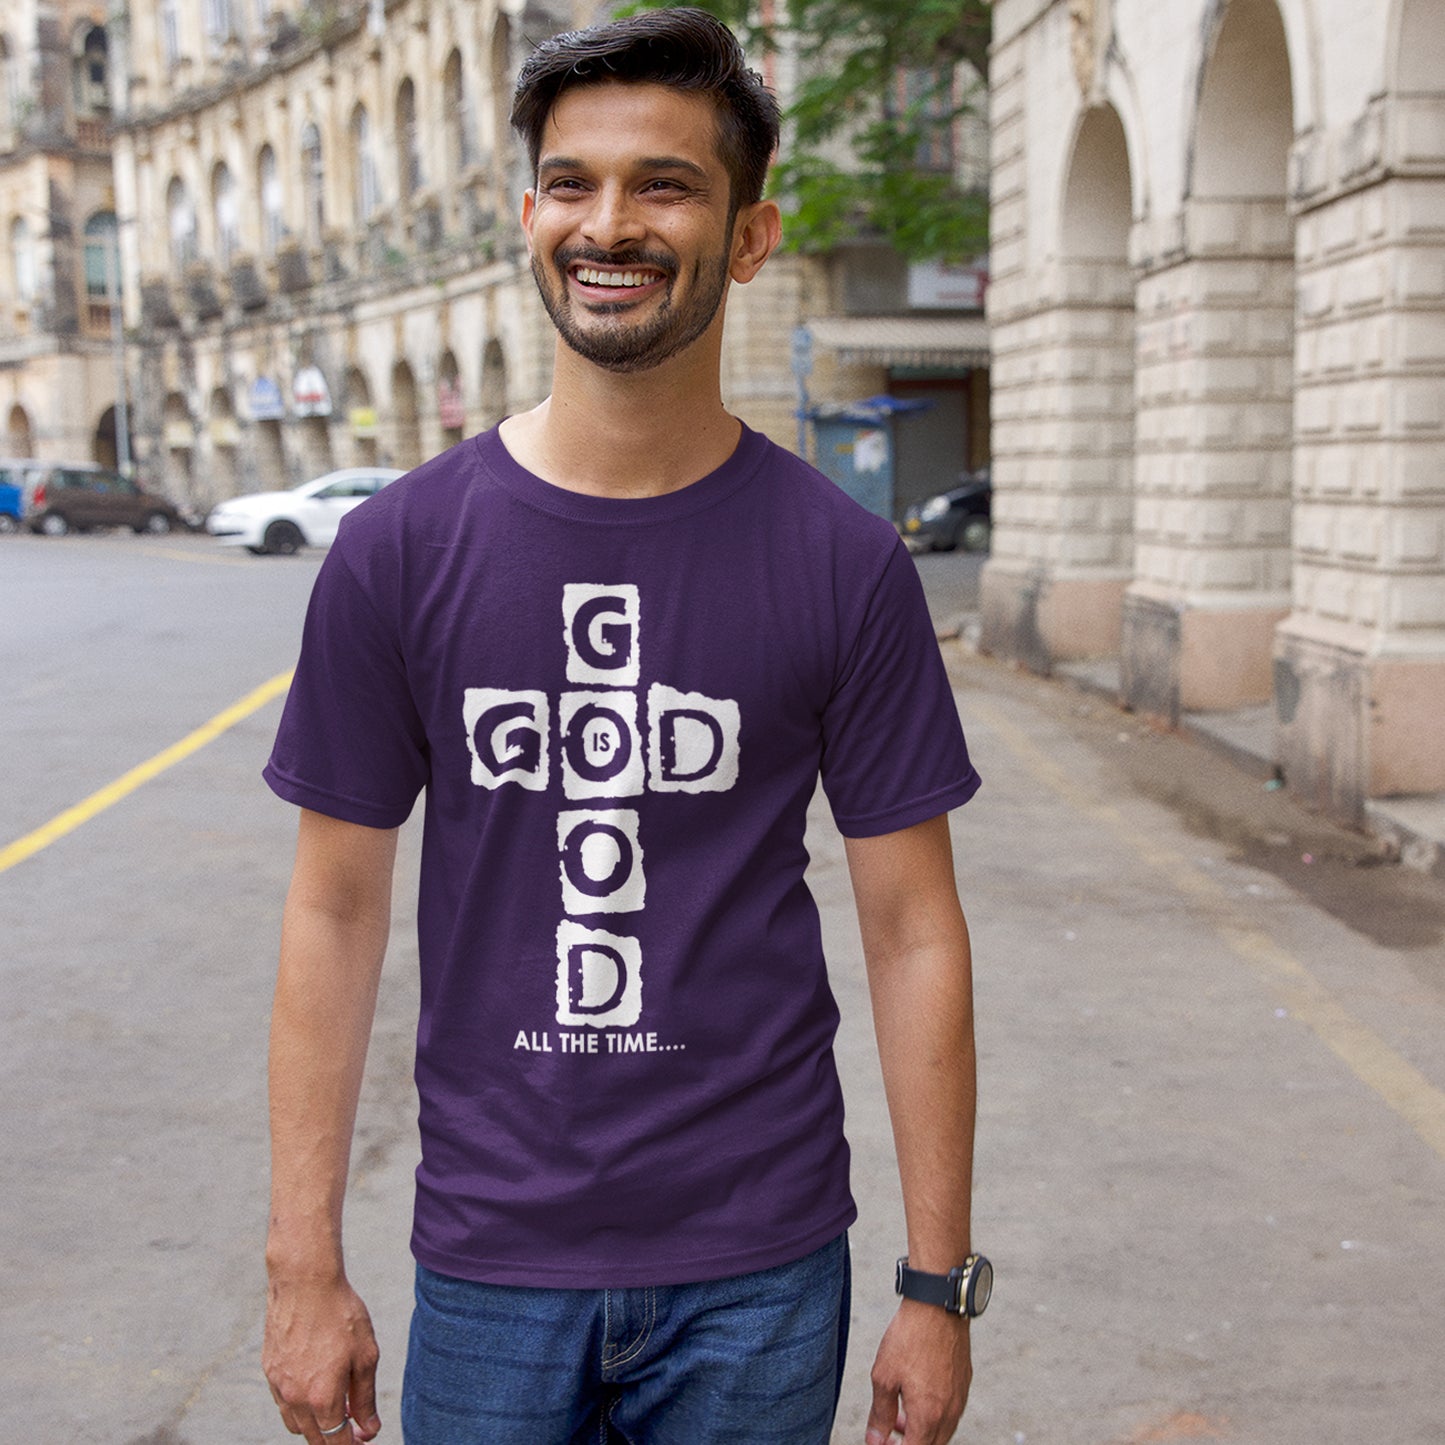 God is Good - Men T-shirts